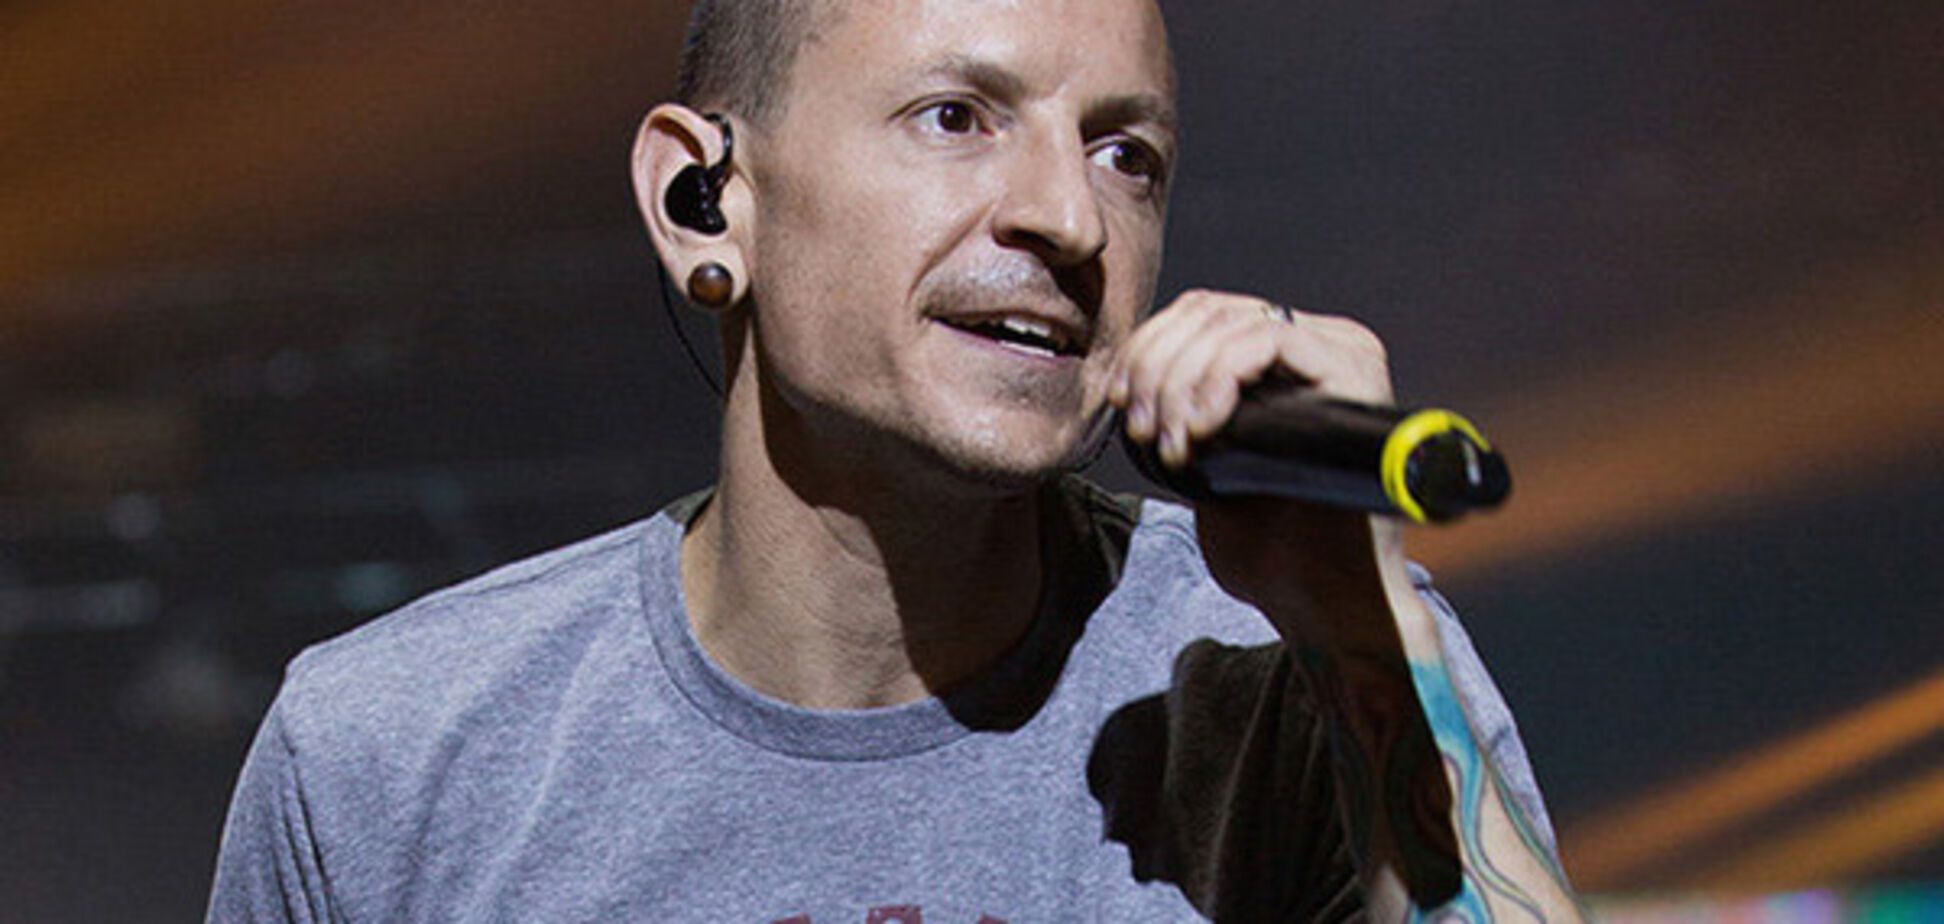 Честер Беннінгтон, Linkin Park